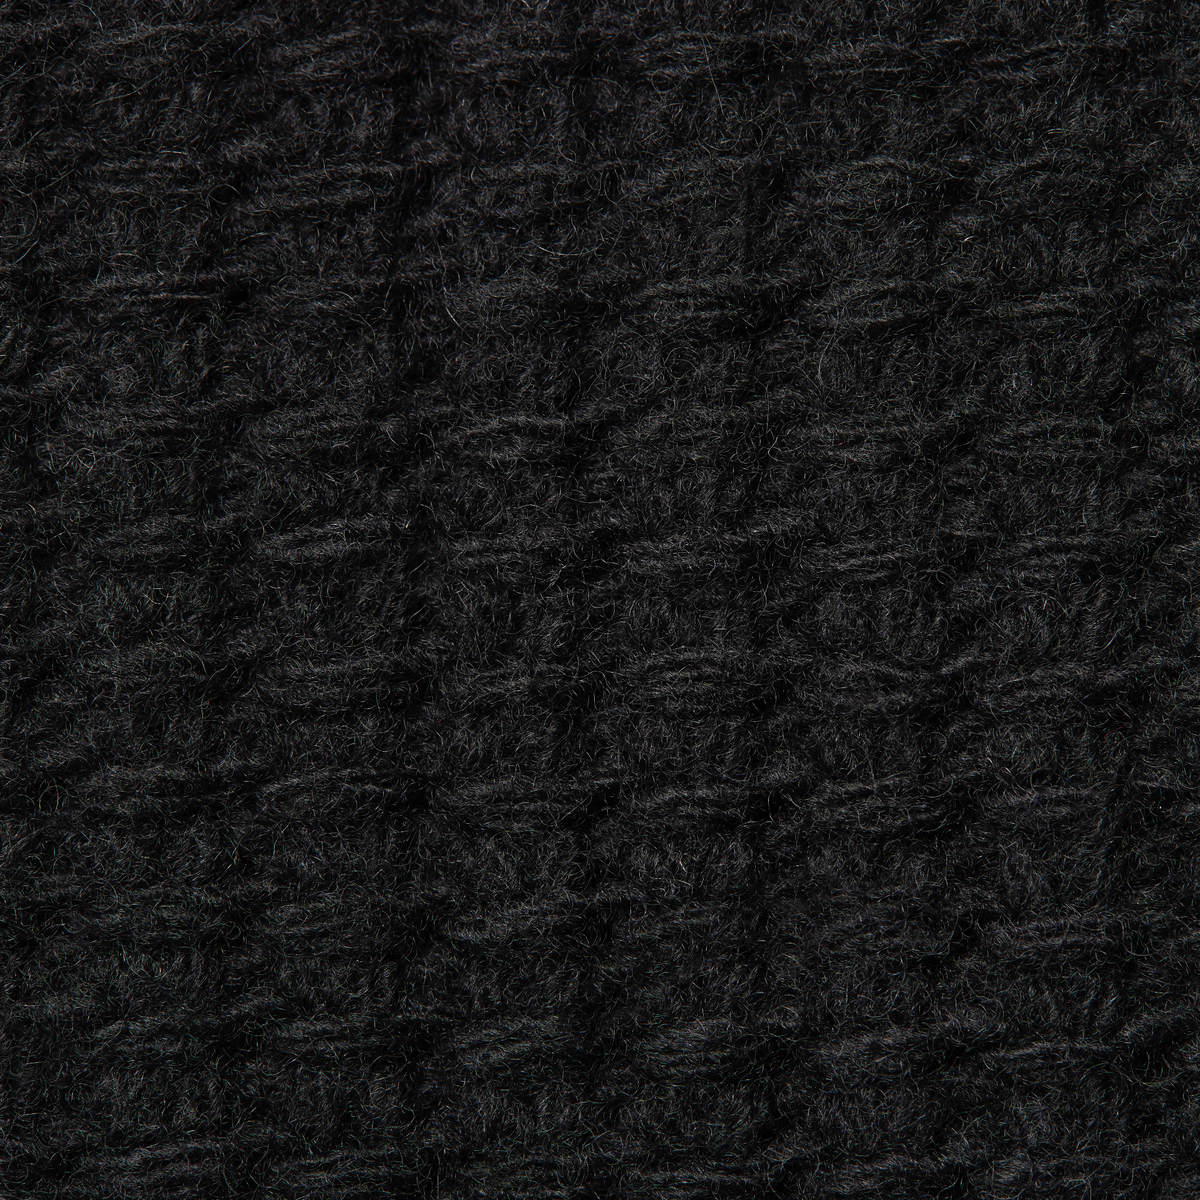 Swatch Sample of Sferra Pettra Throw Blanket in Black Color